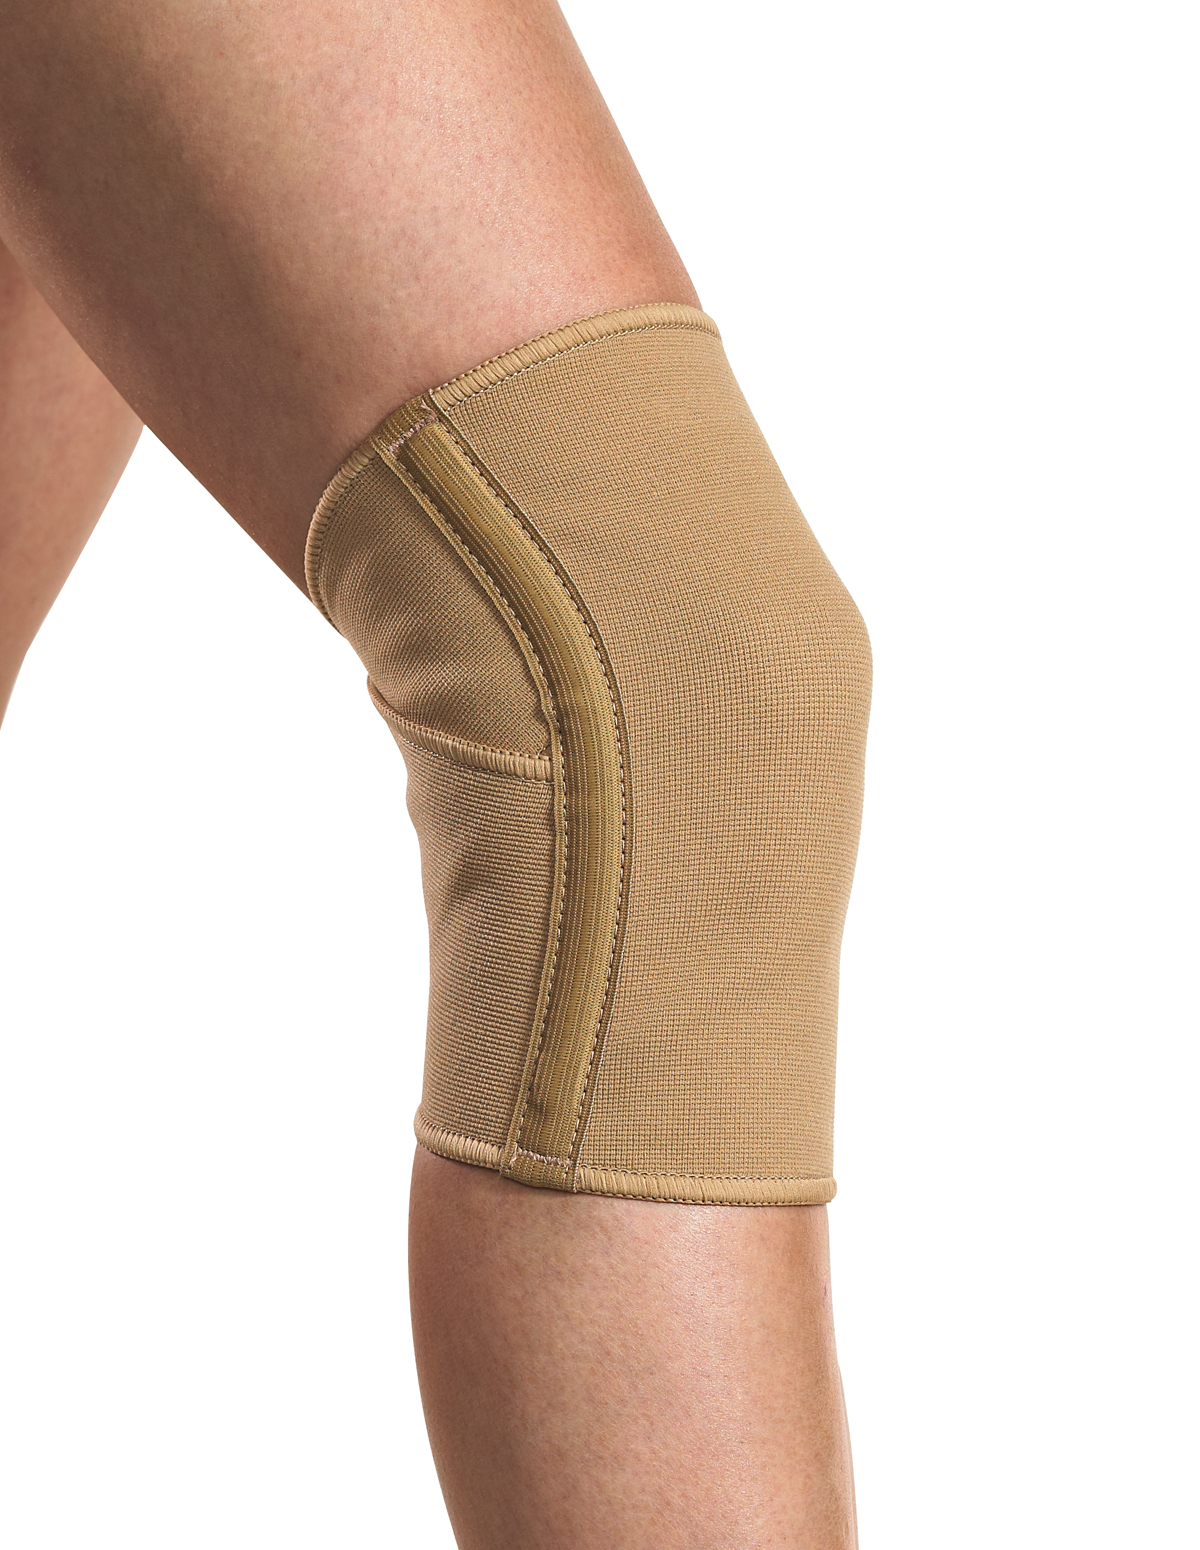 Ergonomic Knee Support